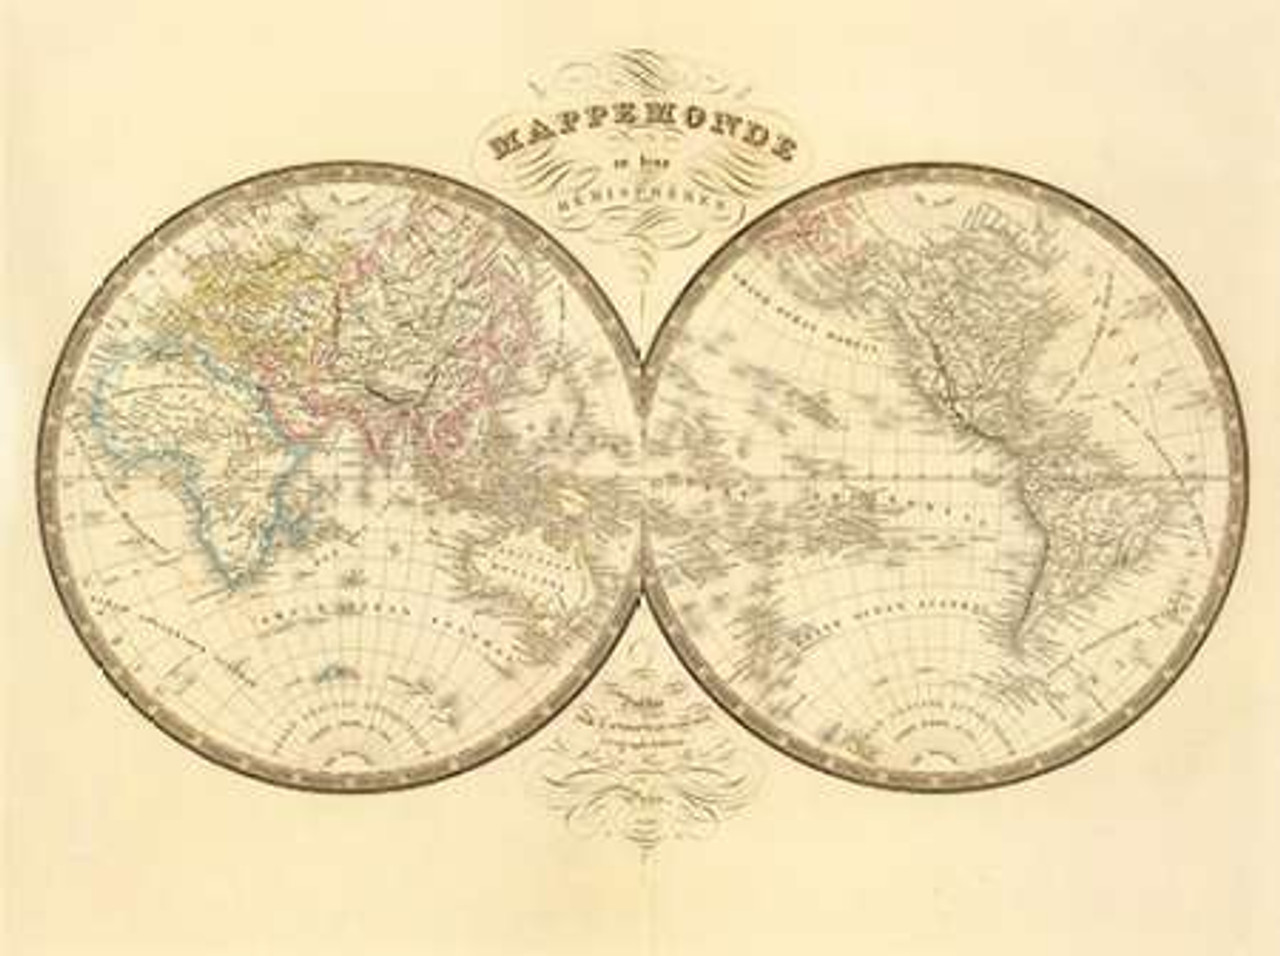 Mappemonde, 1849 Poster Print by J. Andriveau-Goujon - Item # VARPDX294915  - Posterazzi